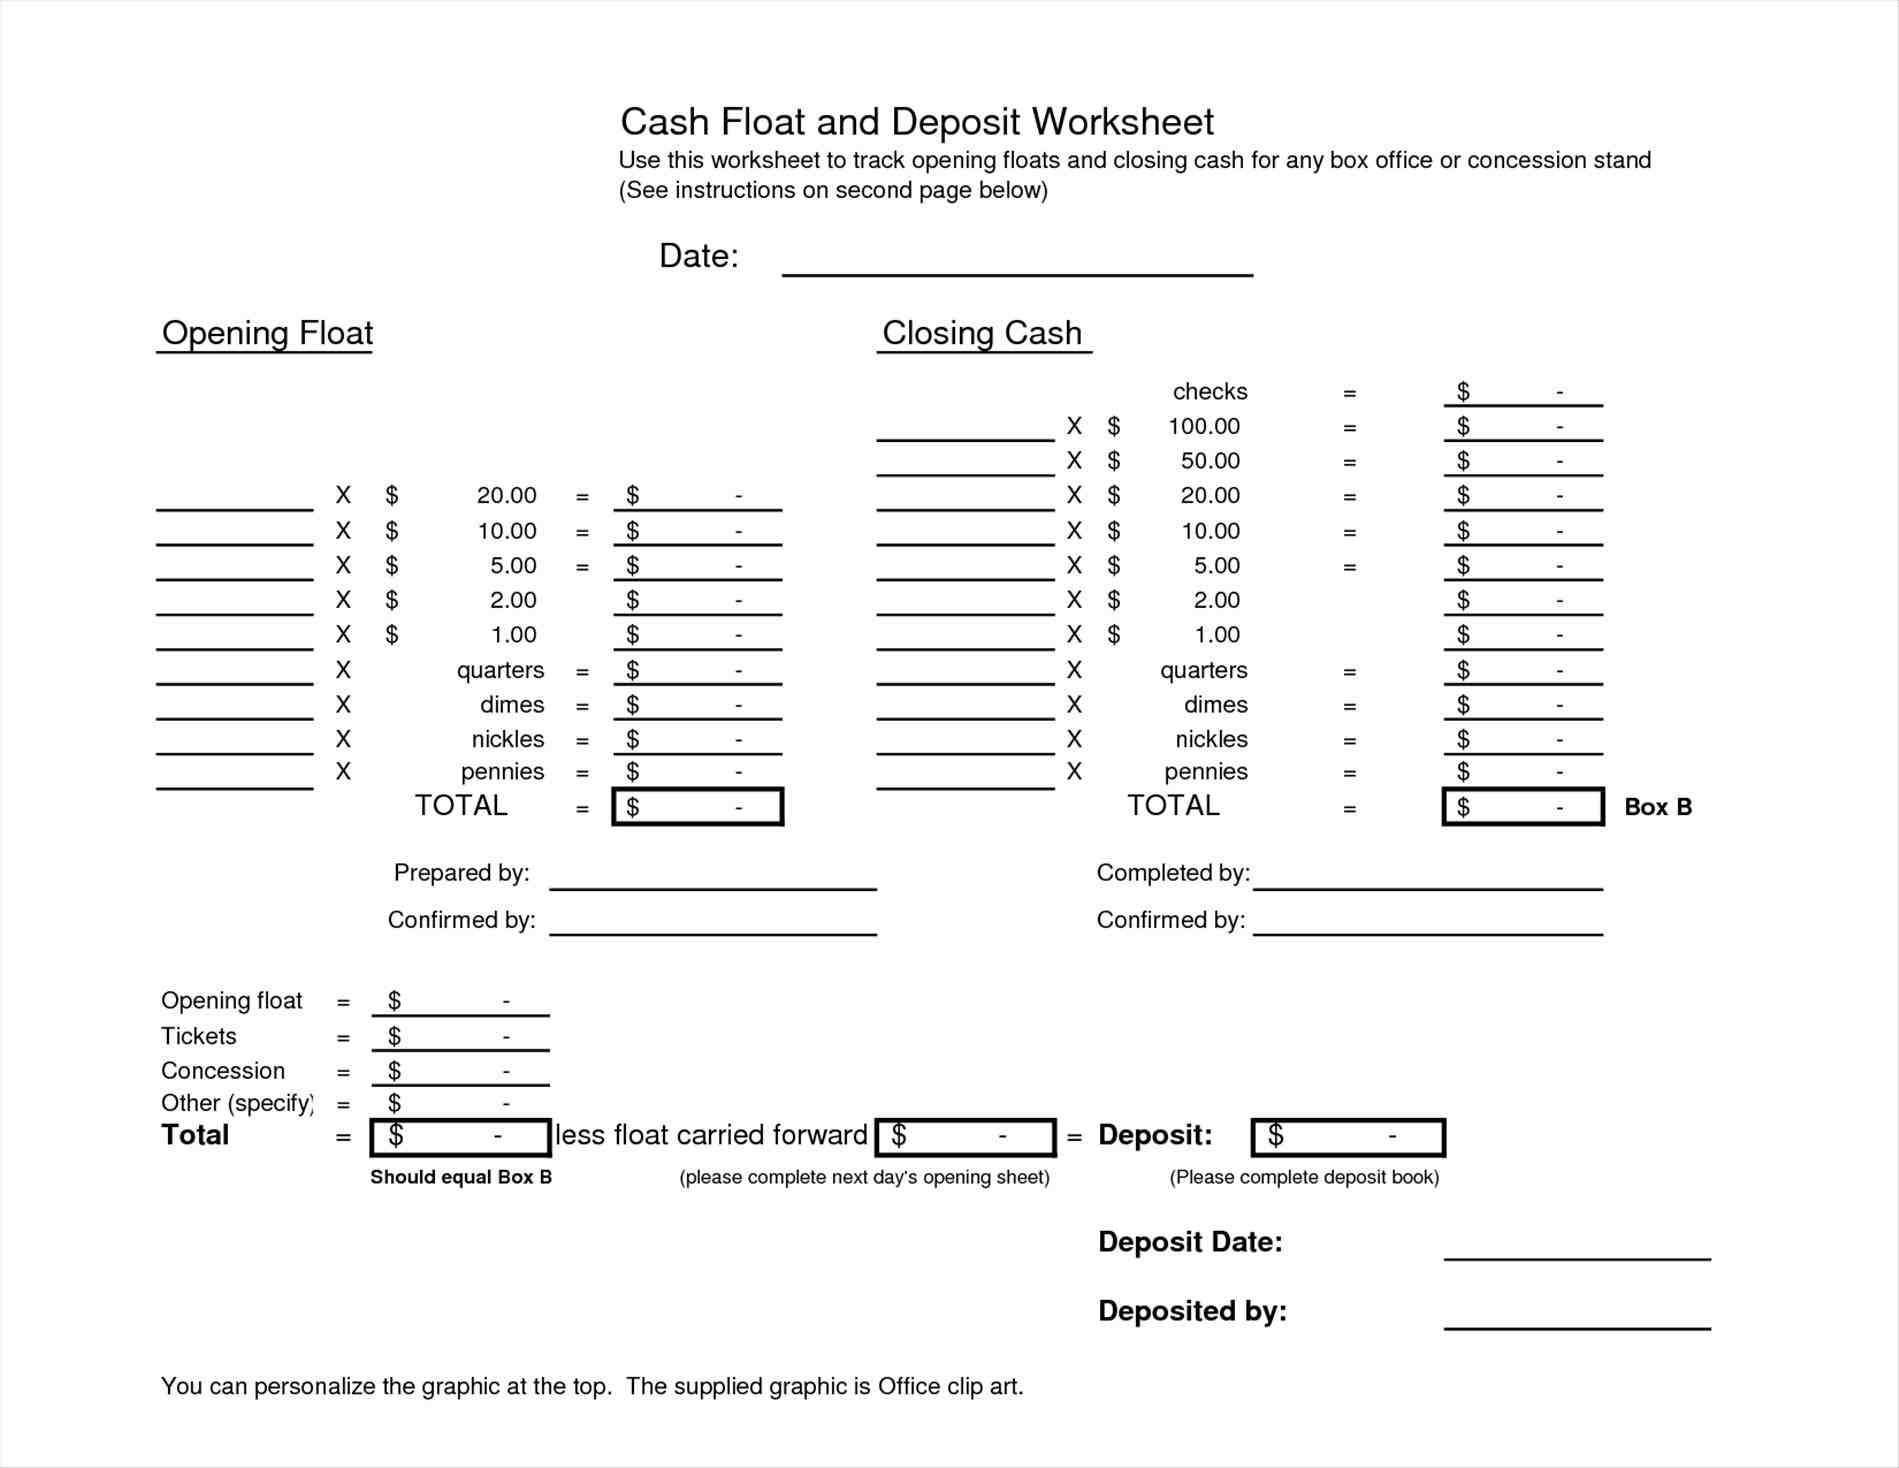 Cash Sheet Template register till balance shift sheet in out template google asset excel ccqgd new free printable asset Daily